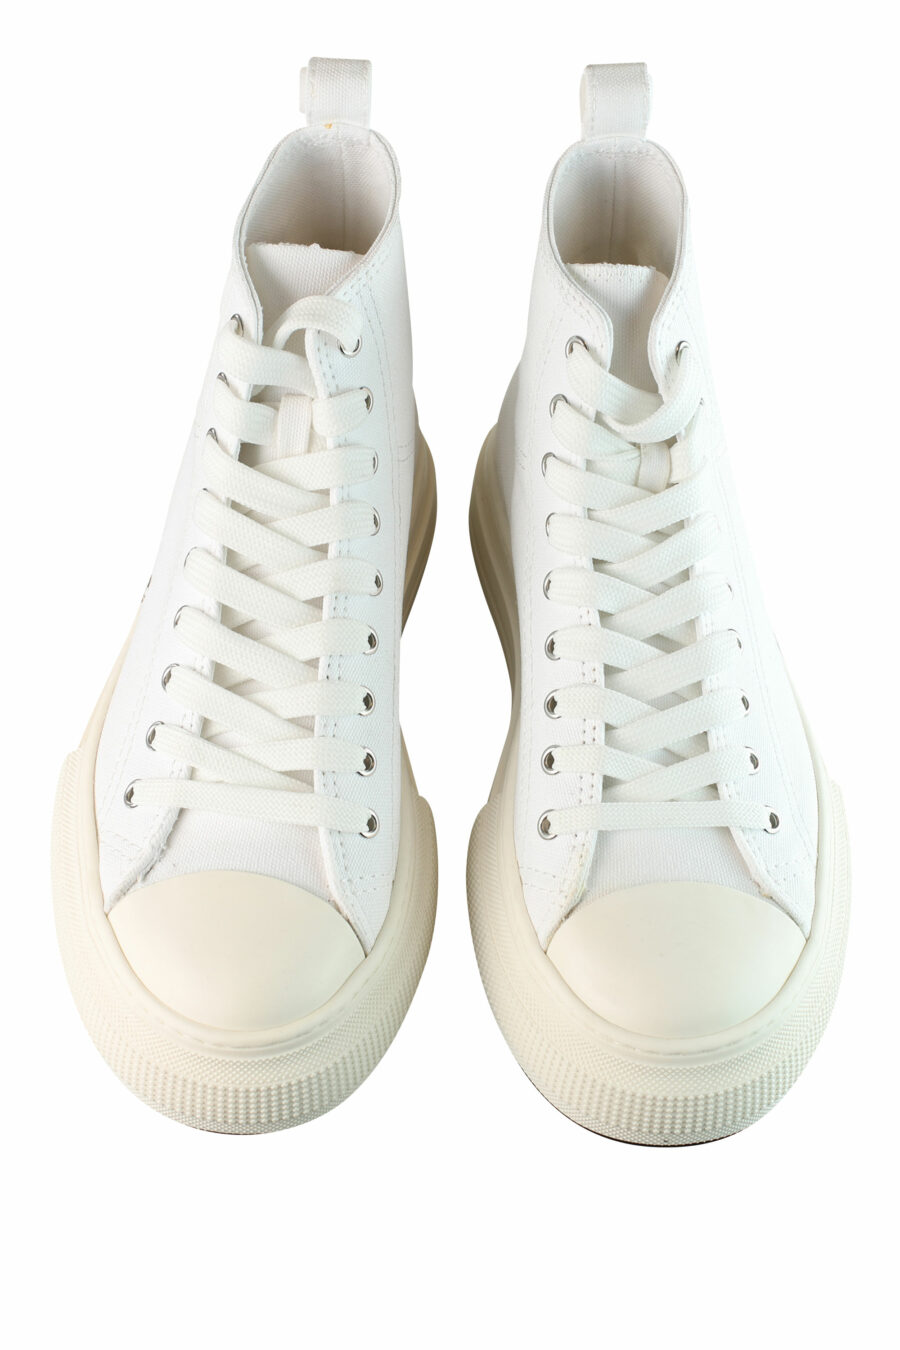 Zapatillas blancas estilo botin con plataforma y logo mini - IMG 1451